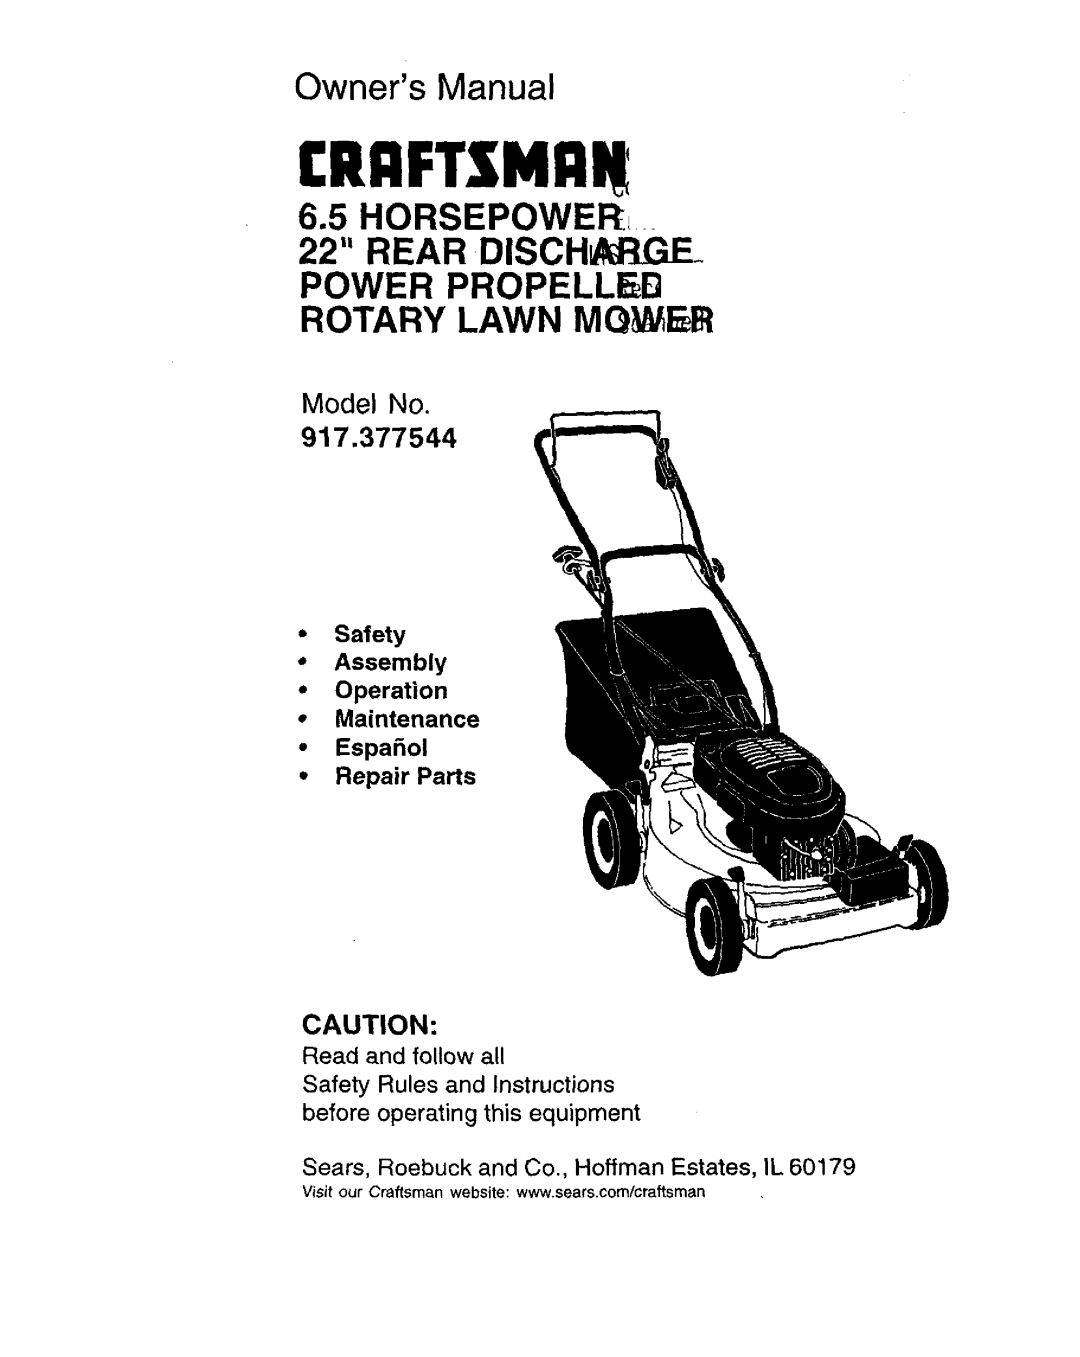 Craftsman 917.377544 owner manual Model No, CRnFTSMnN, 6.5HORSEPOWER! 22 REAR DISCH, Power Propelled Rotary Lawn Mq / E 